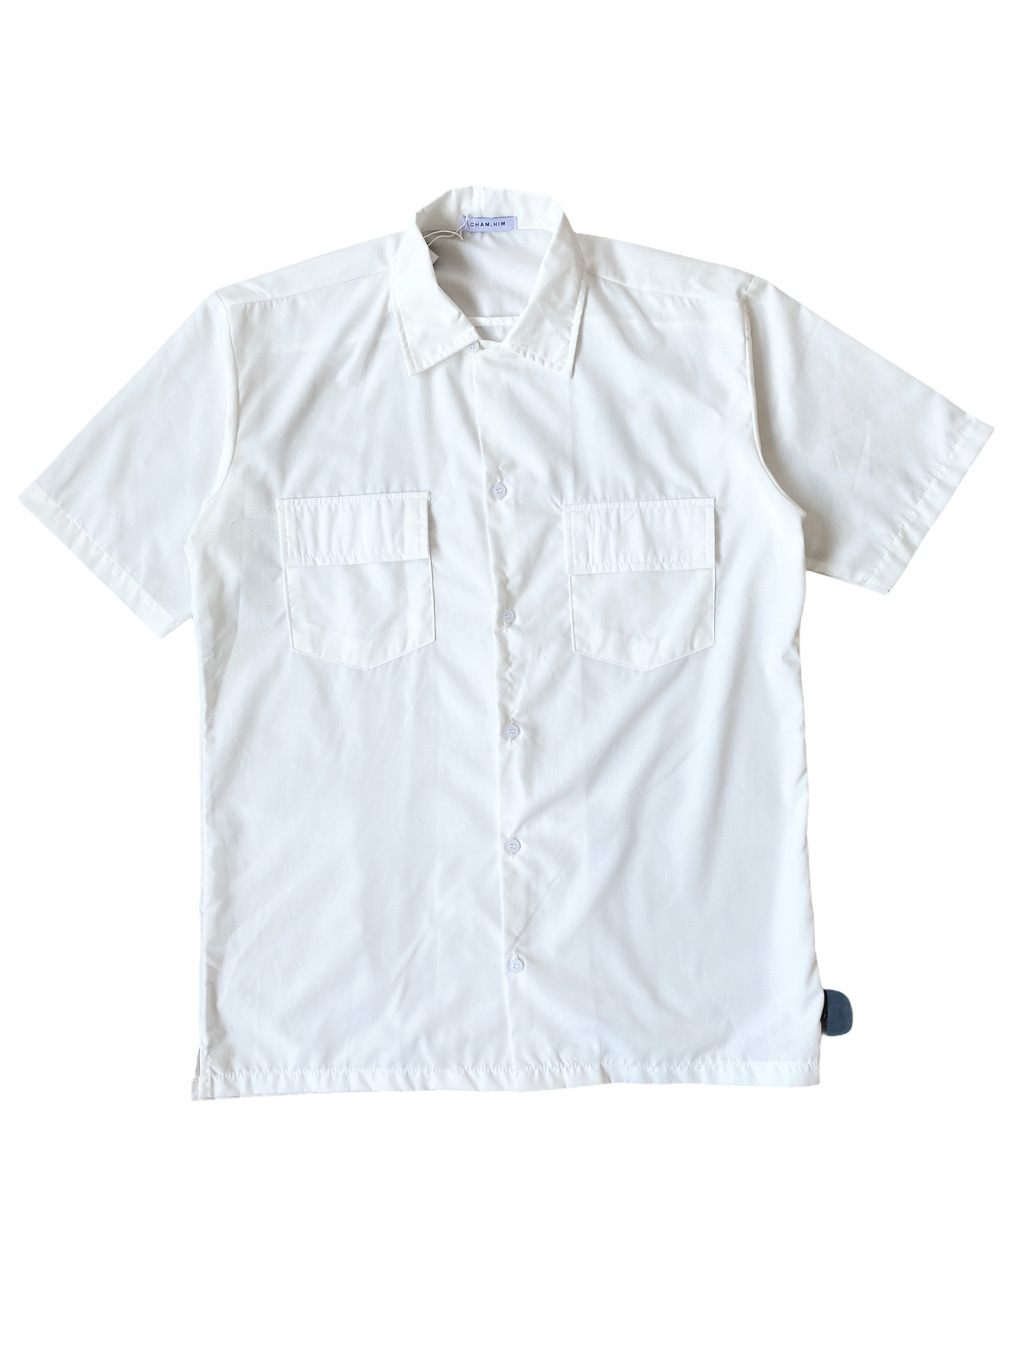 Benly Shirt  (White)